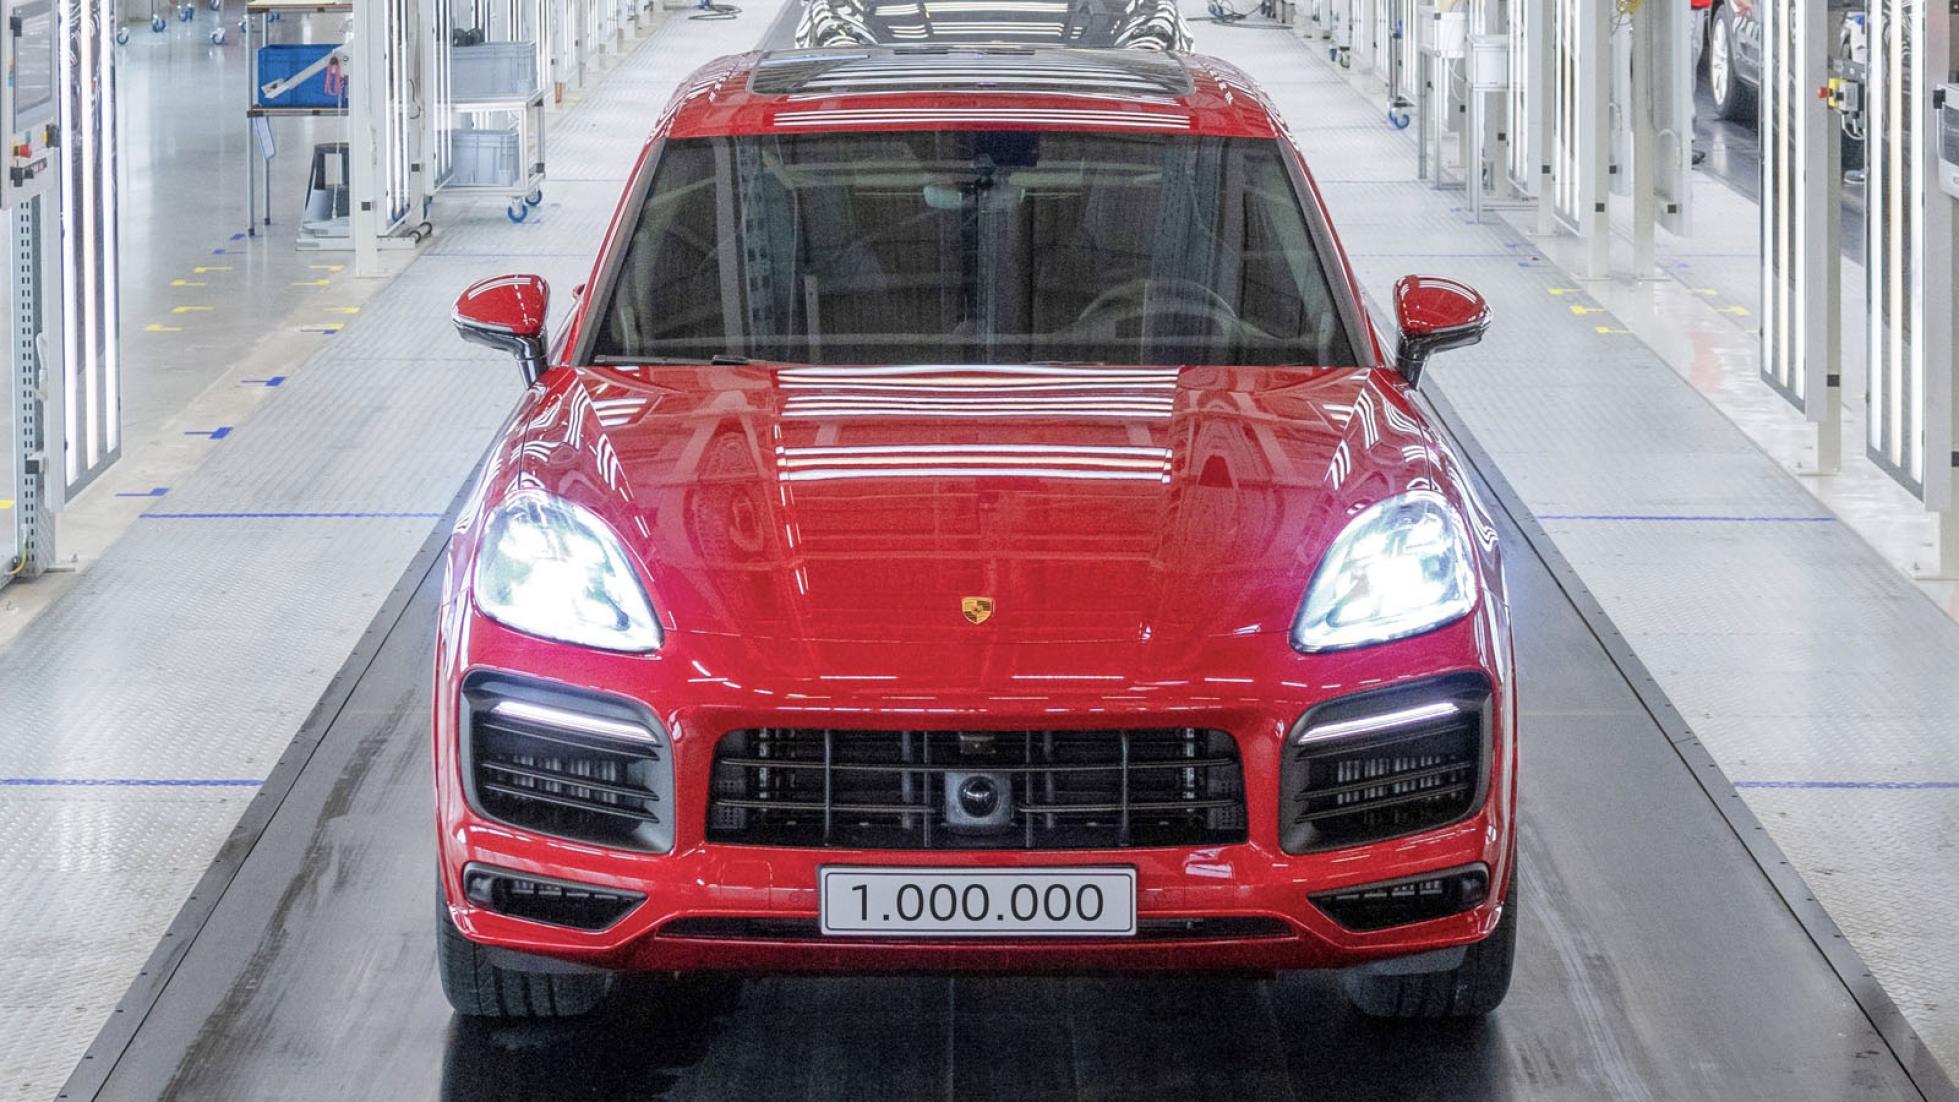 Porsche has just built its 1,000,000th Cayenne SUV